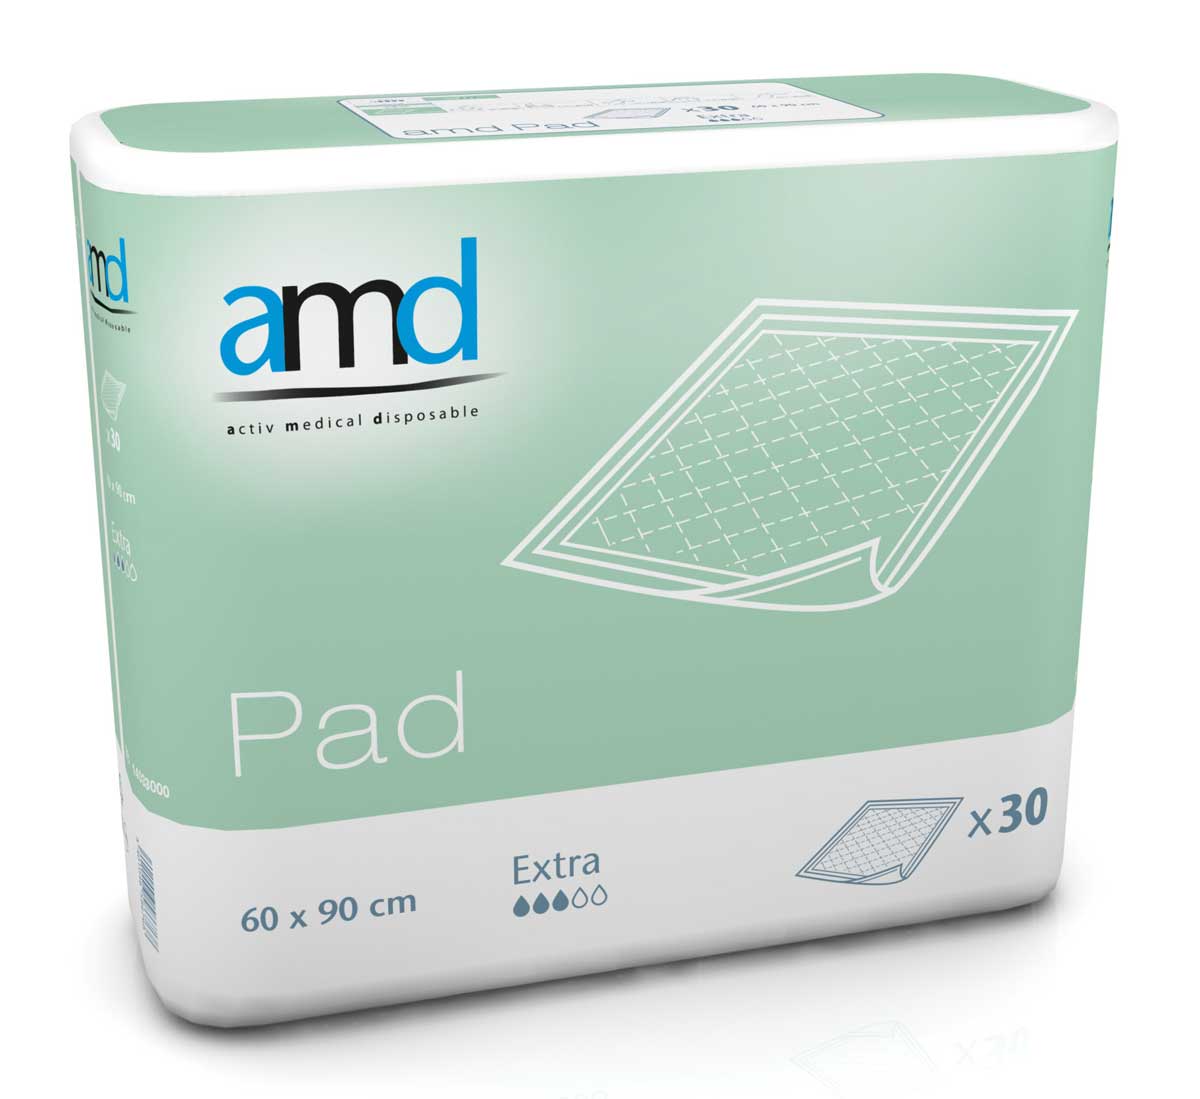 AMD PAD - Inkontinenzauflage - EXTRA - 60 x 90cm - 4x30 St. Karton